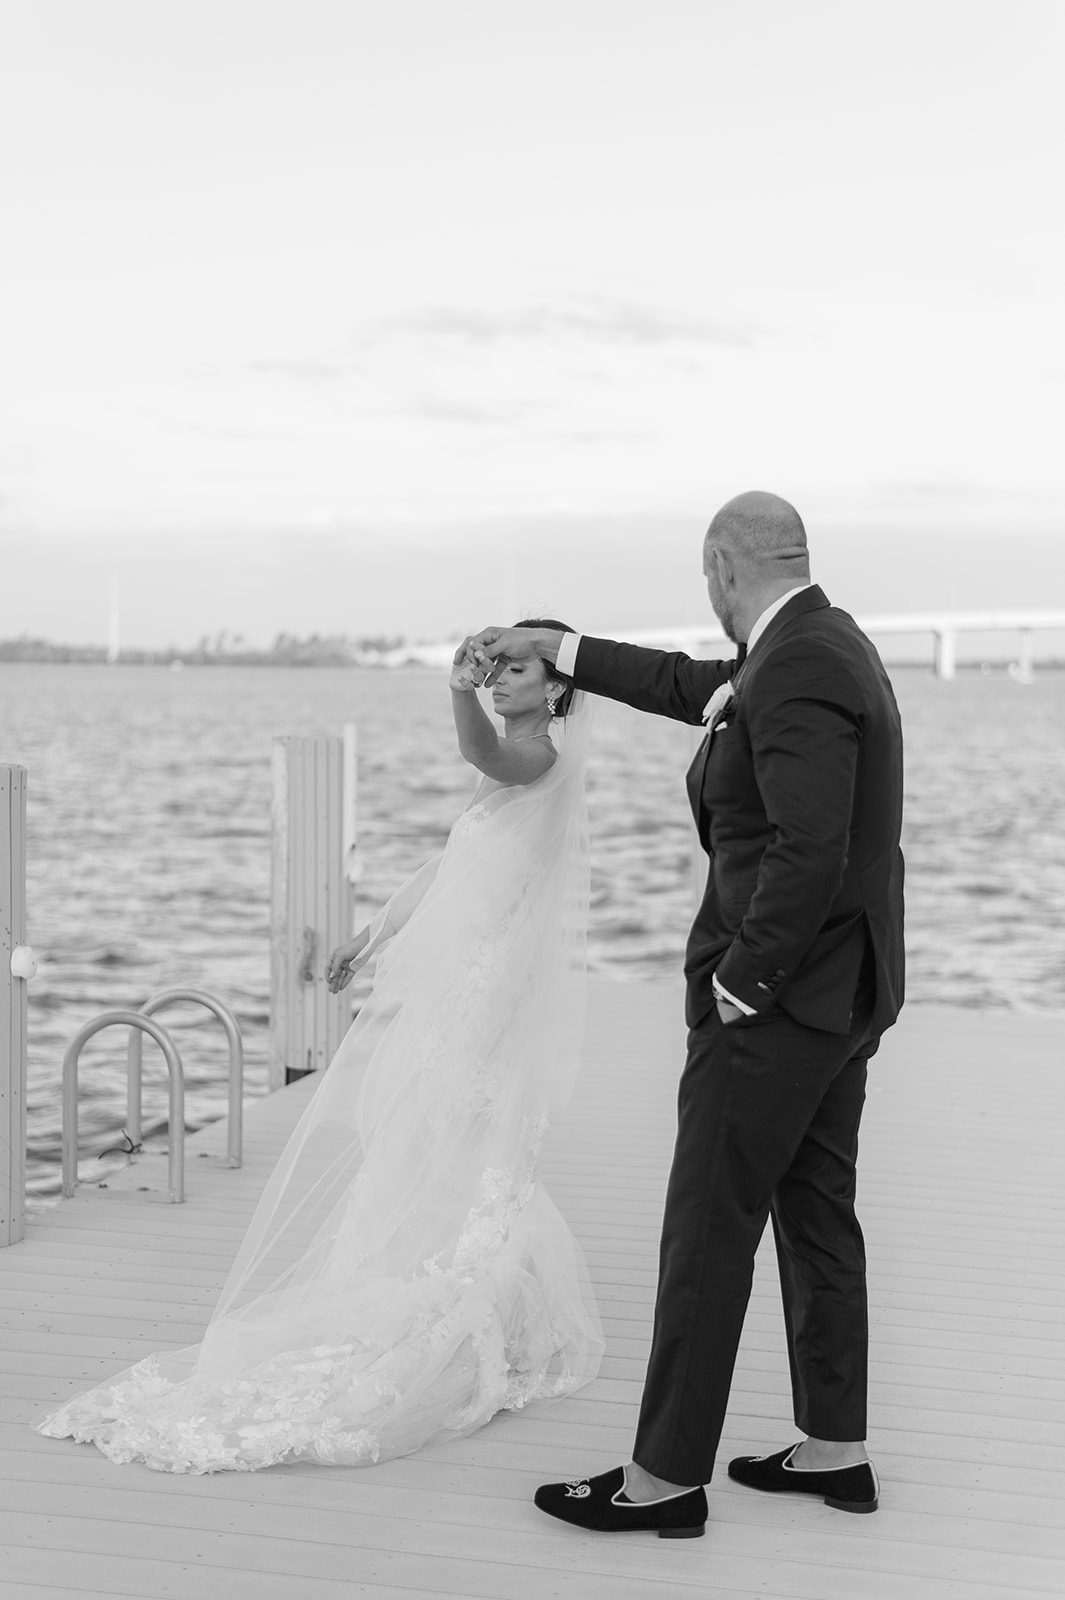 Fine Art Wedding Photography in Naples Florida - Beautiful Memories to Cherish
